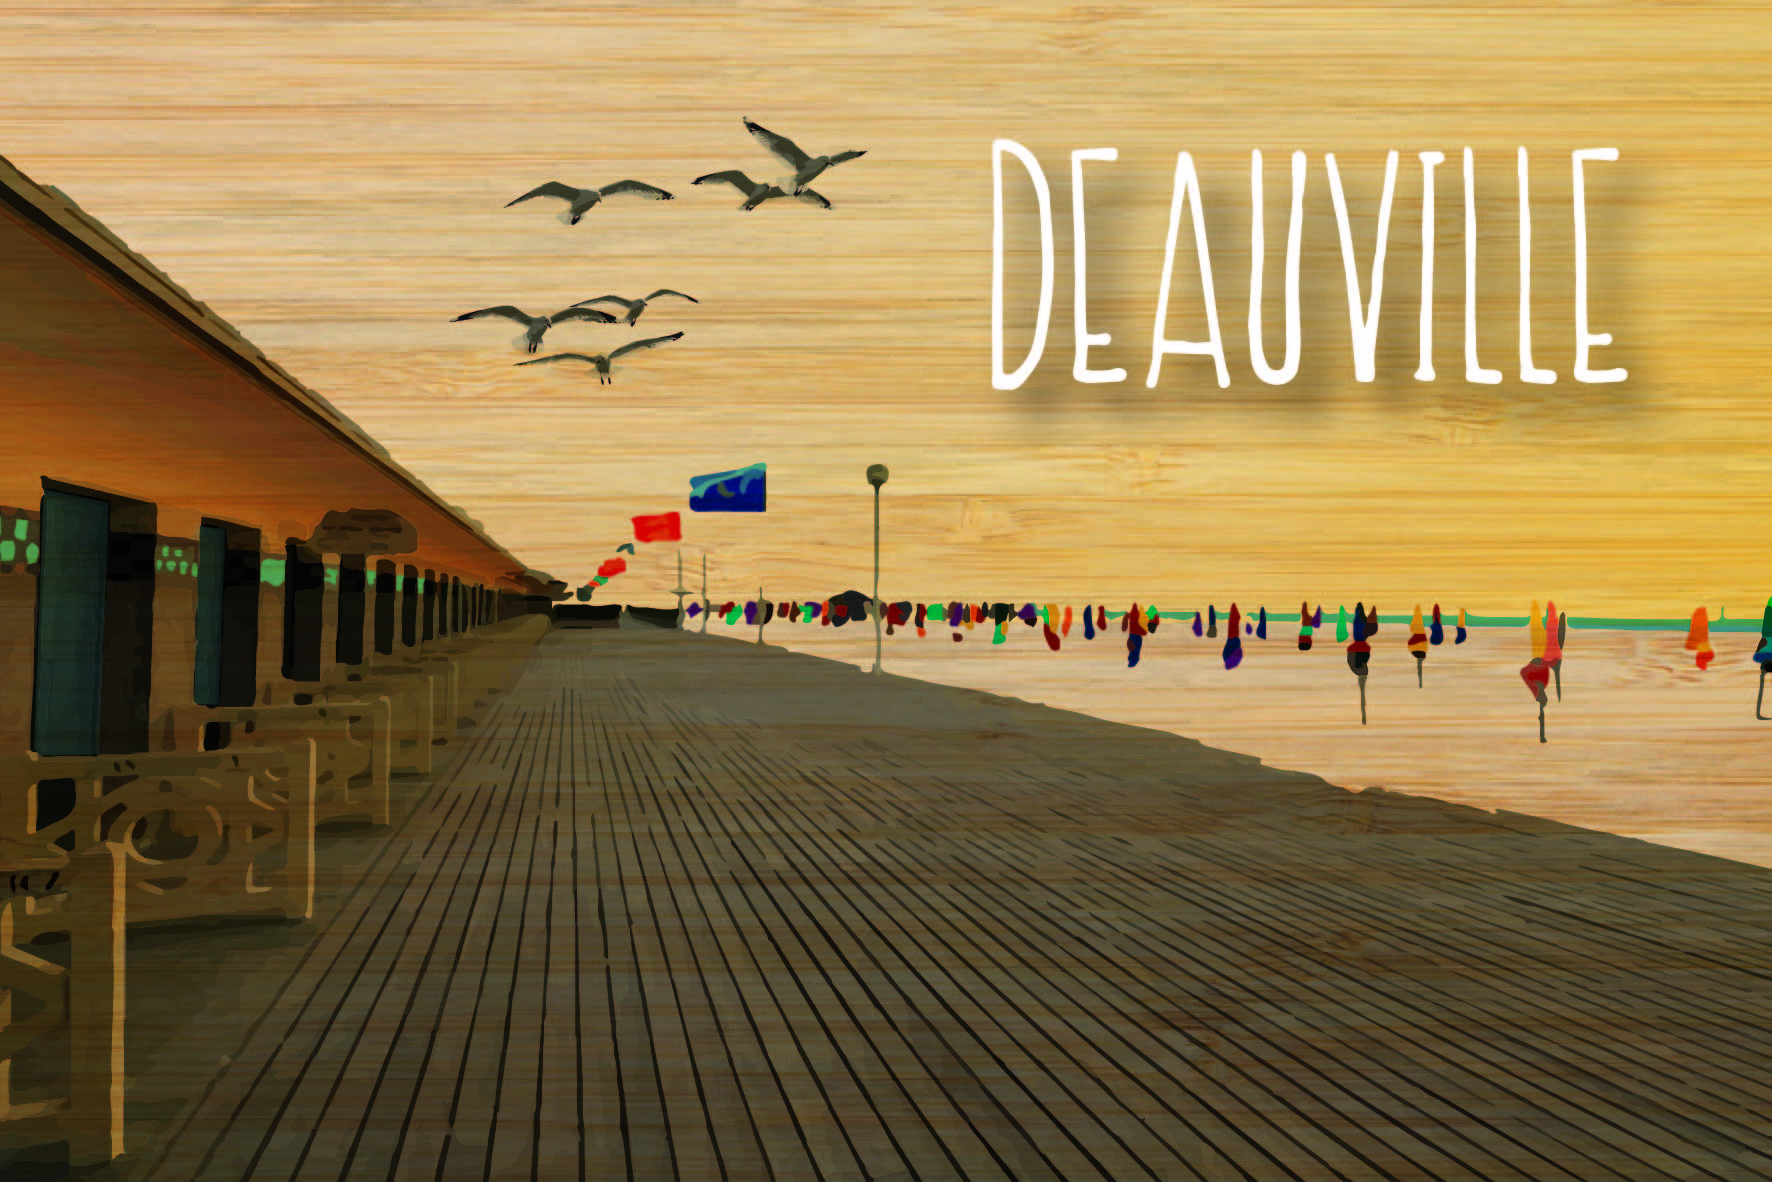 carte postale bois Deauville